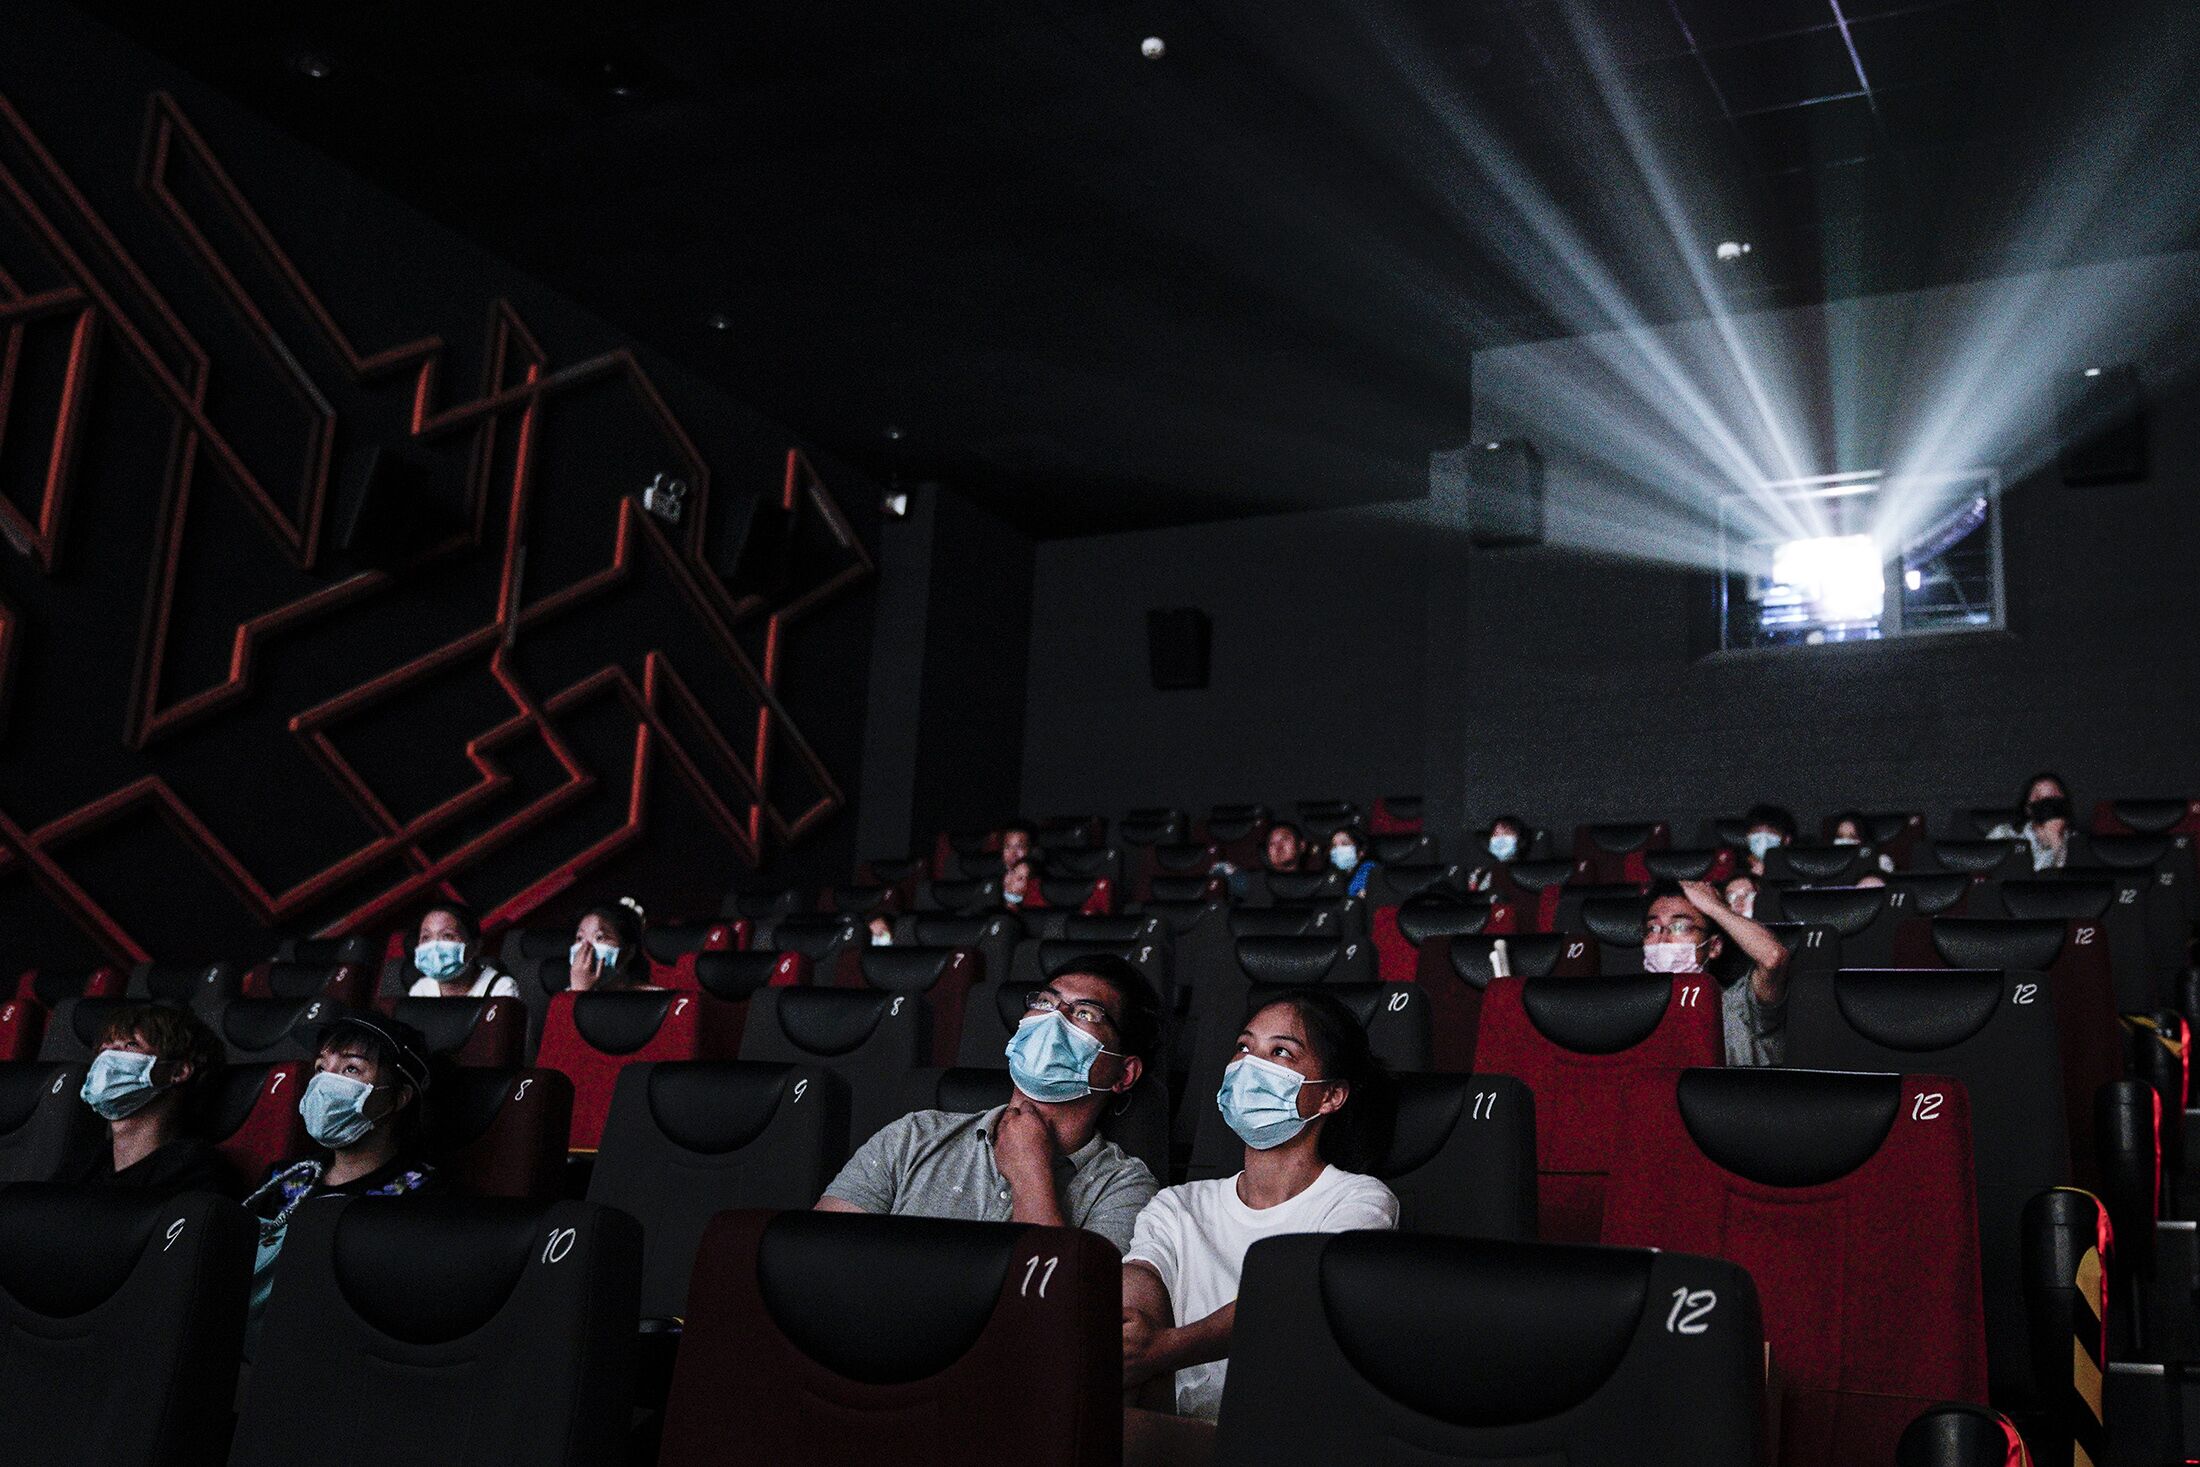 China Summer Box Office Hits Record in Rare Consumer Bright Spot